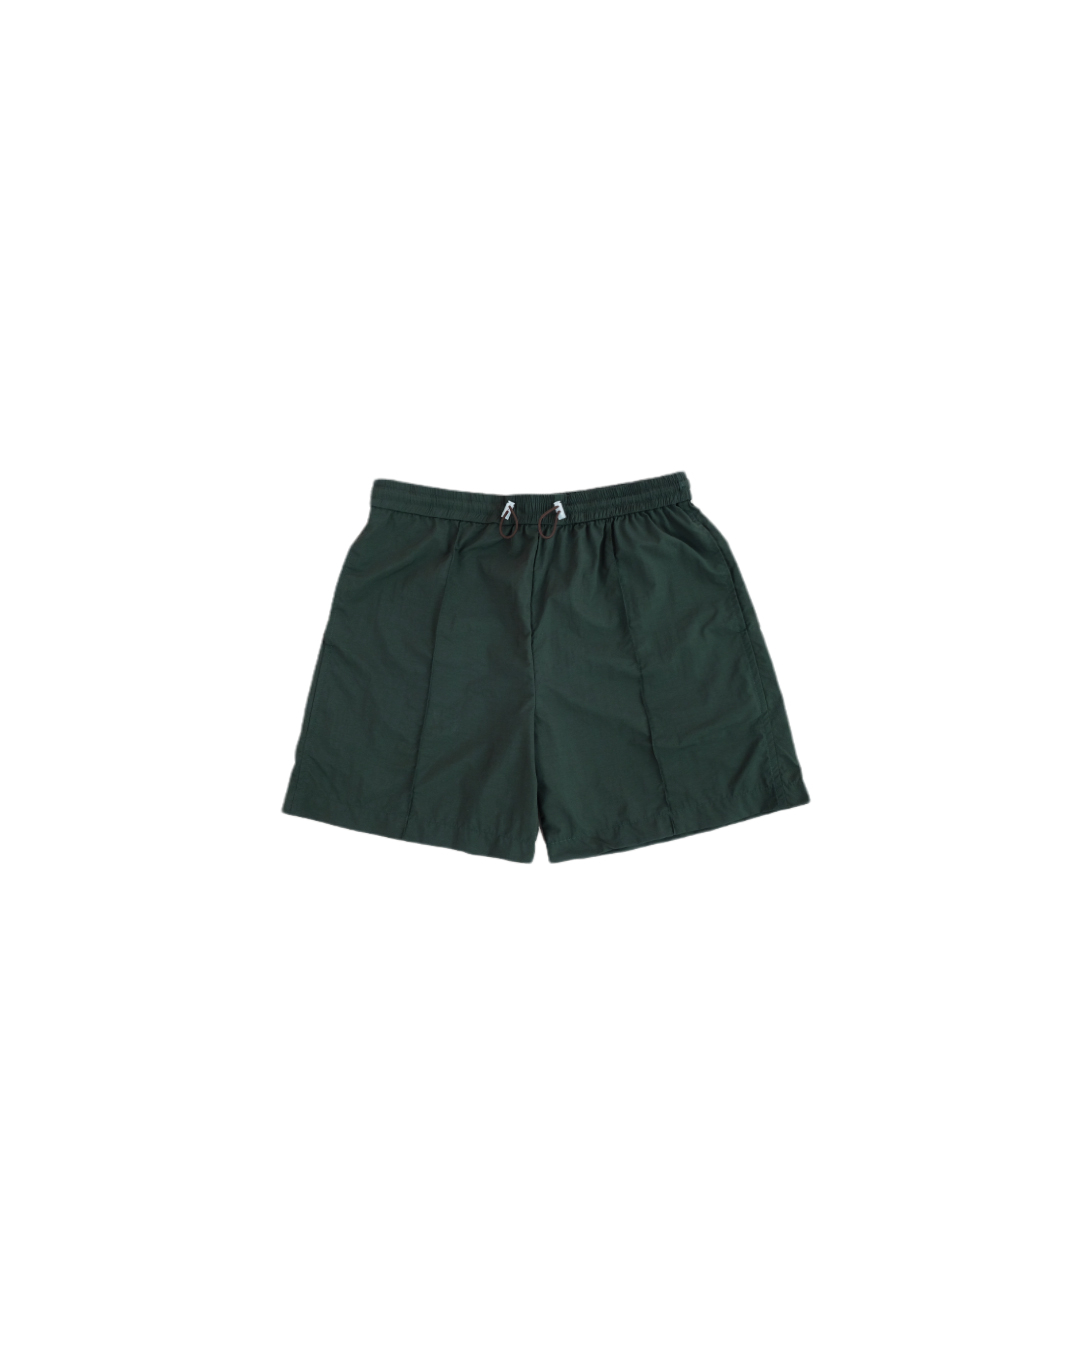 Nylon L/S Shorts (Forest Green)